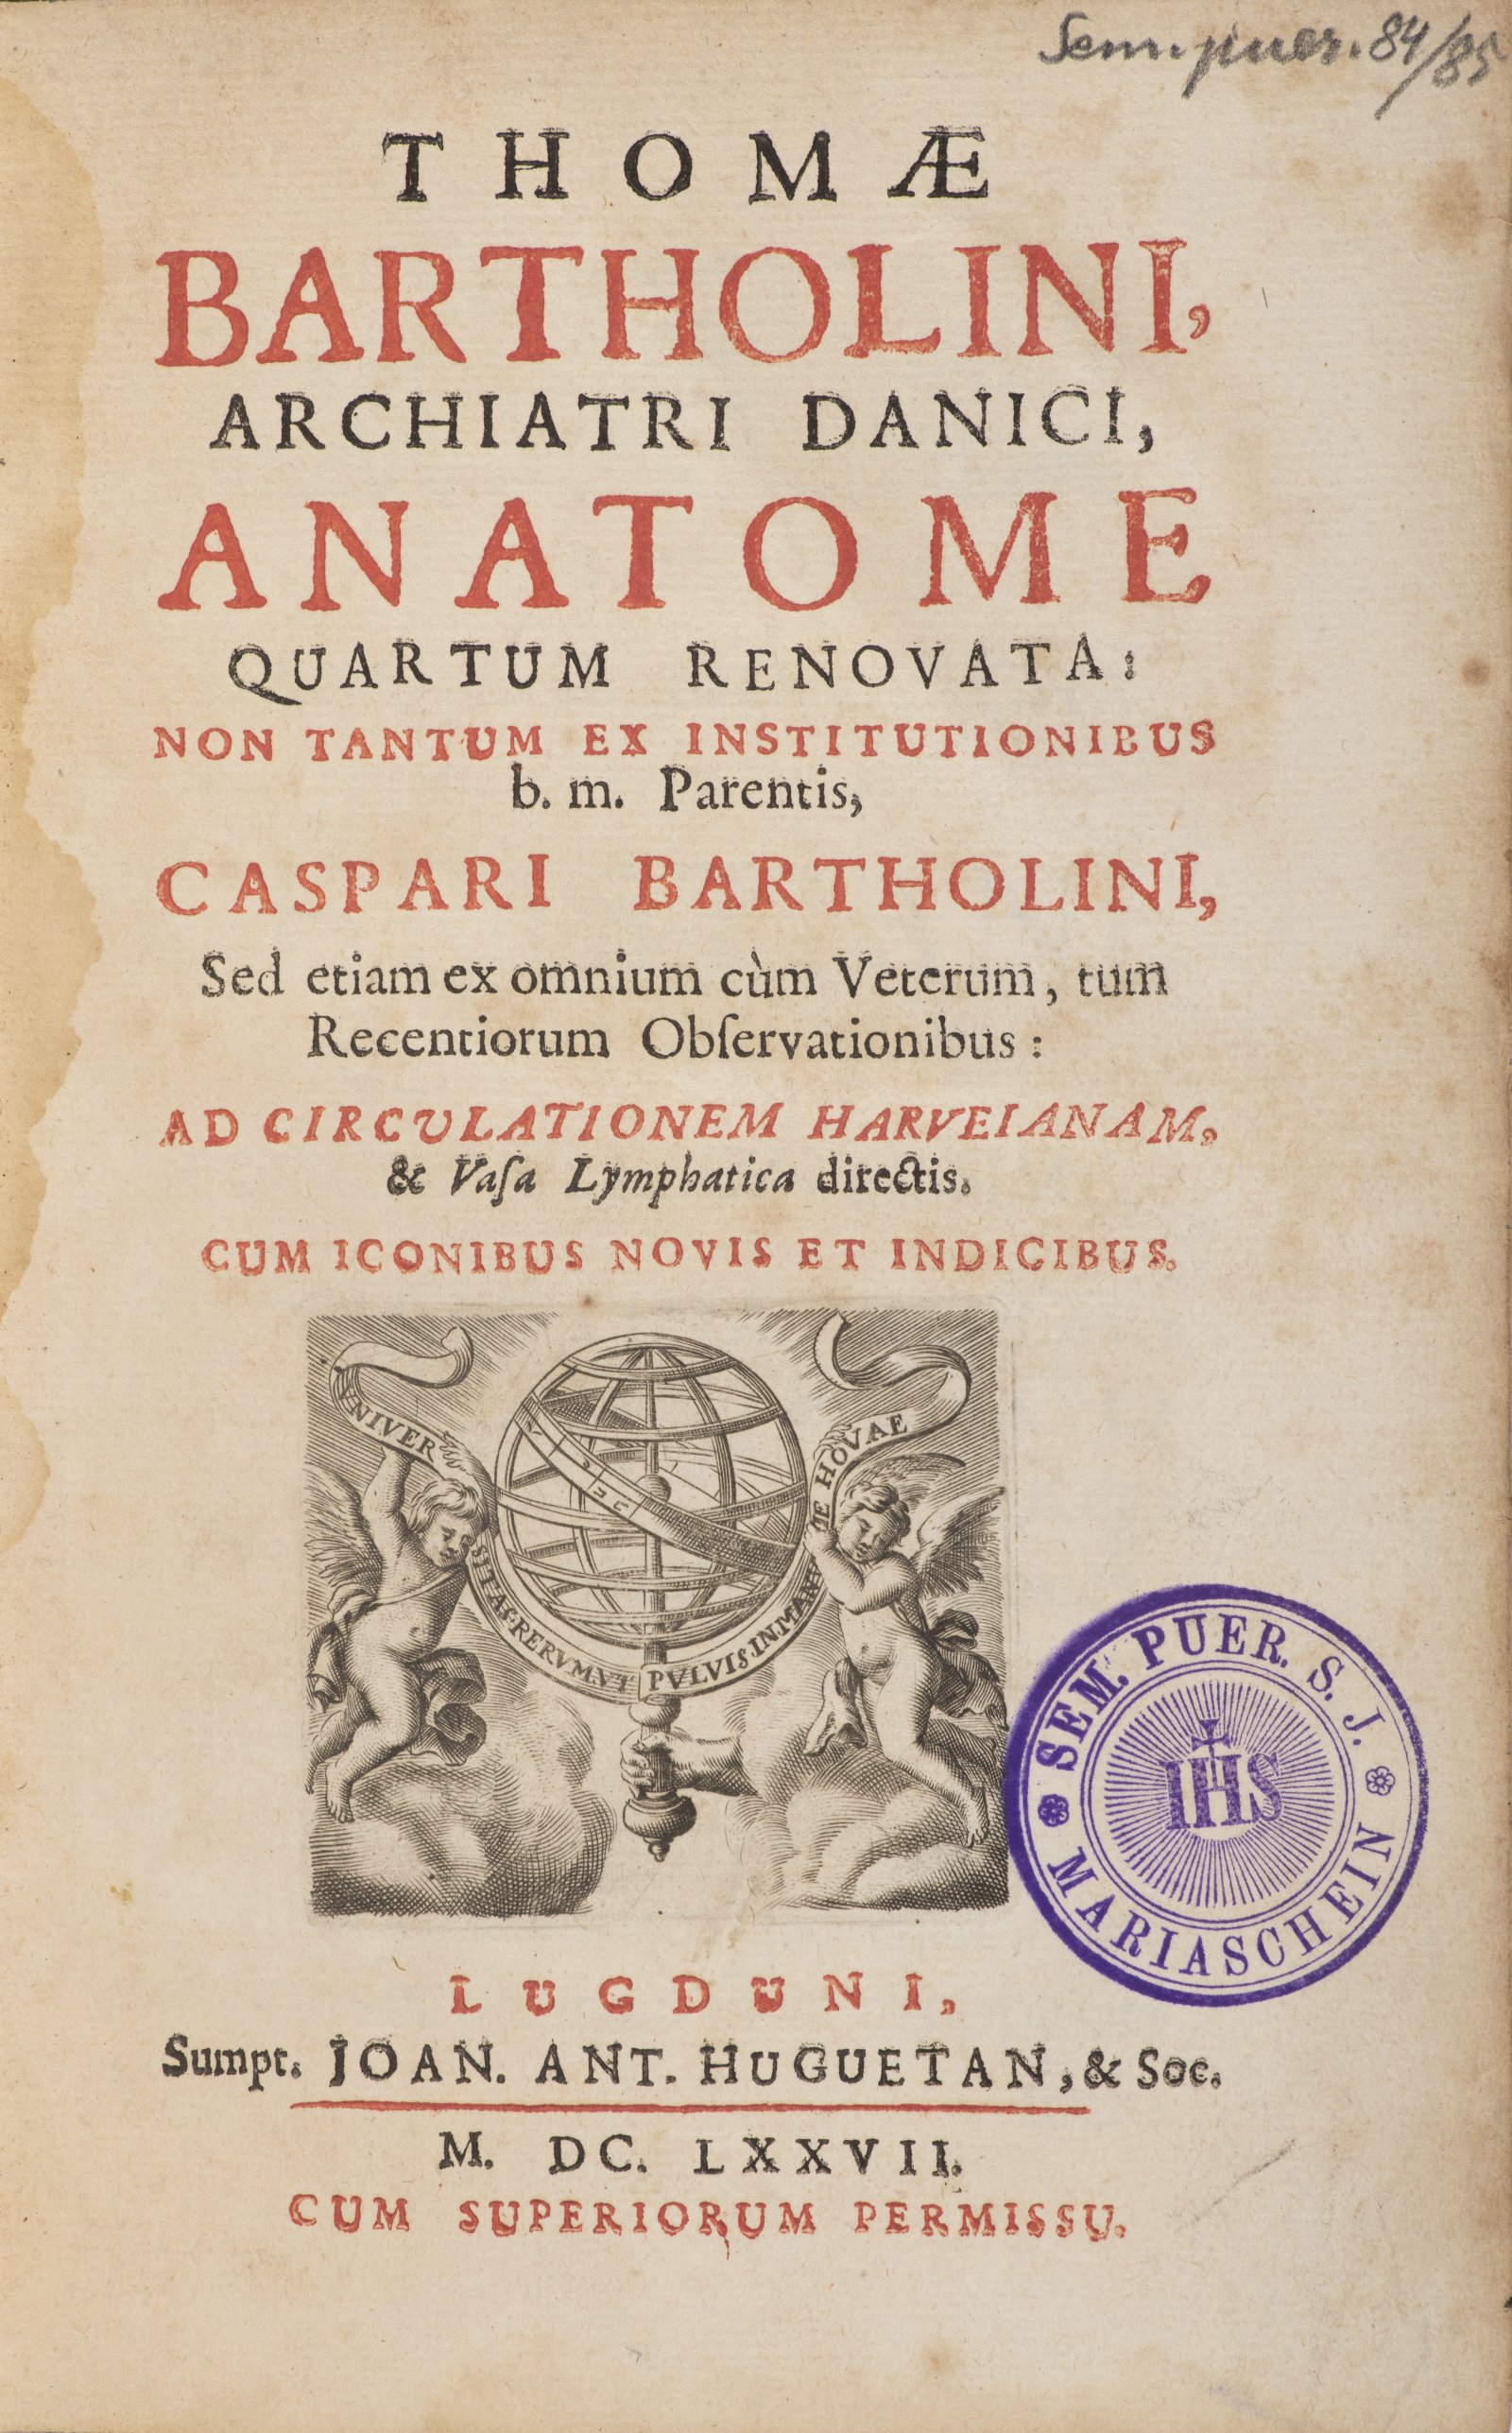 THOMAS BARTHOLIN 1616 - 1680: ANATOME QUARTUM RENOVATA 1677 Period full leather binding, wiped